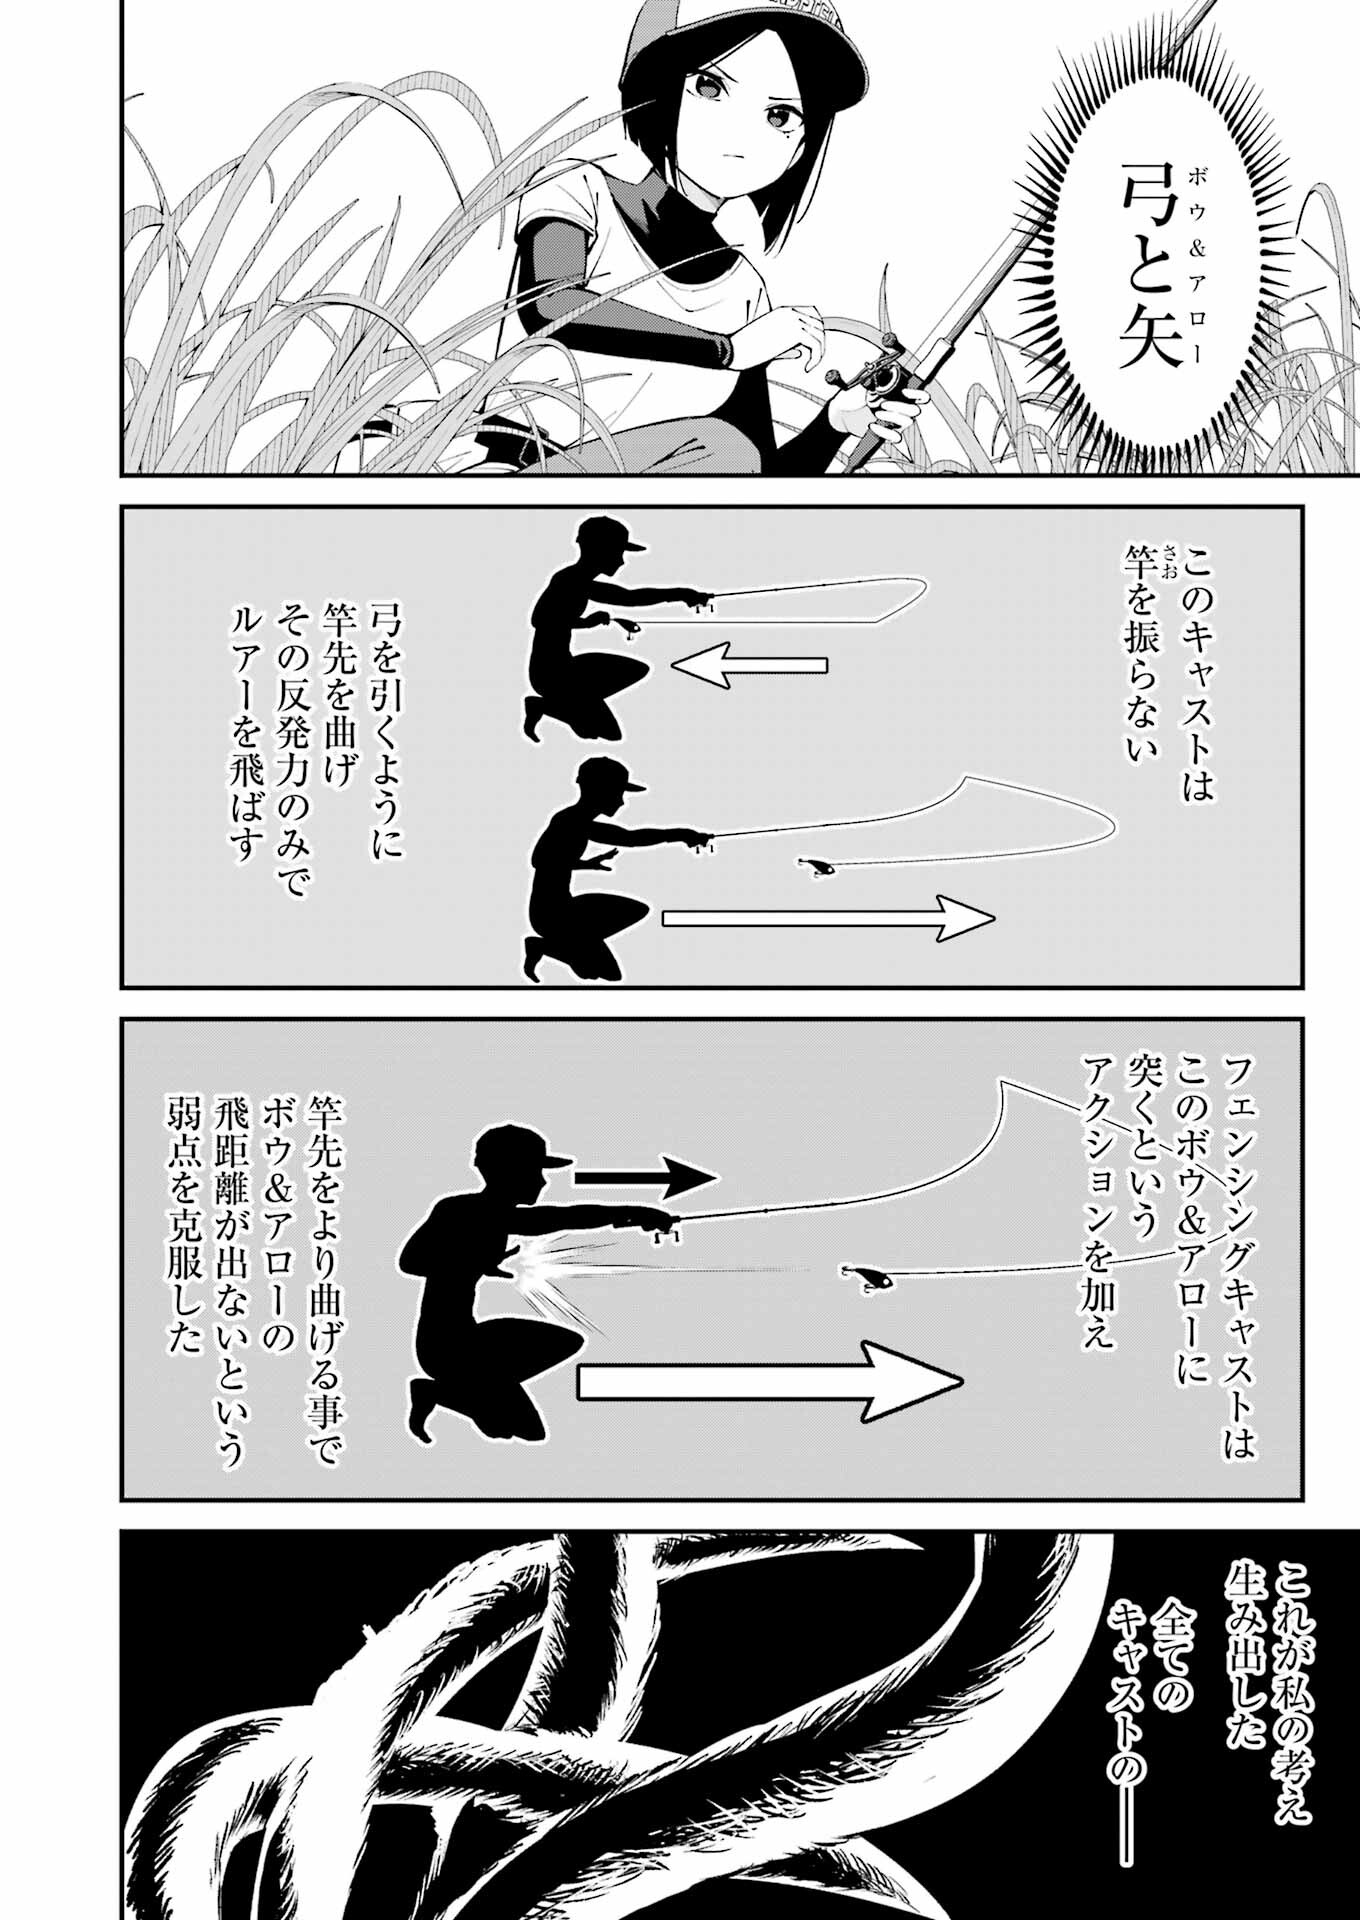 Tsuri Komachi - Chapter 55 - Page 2